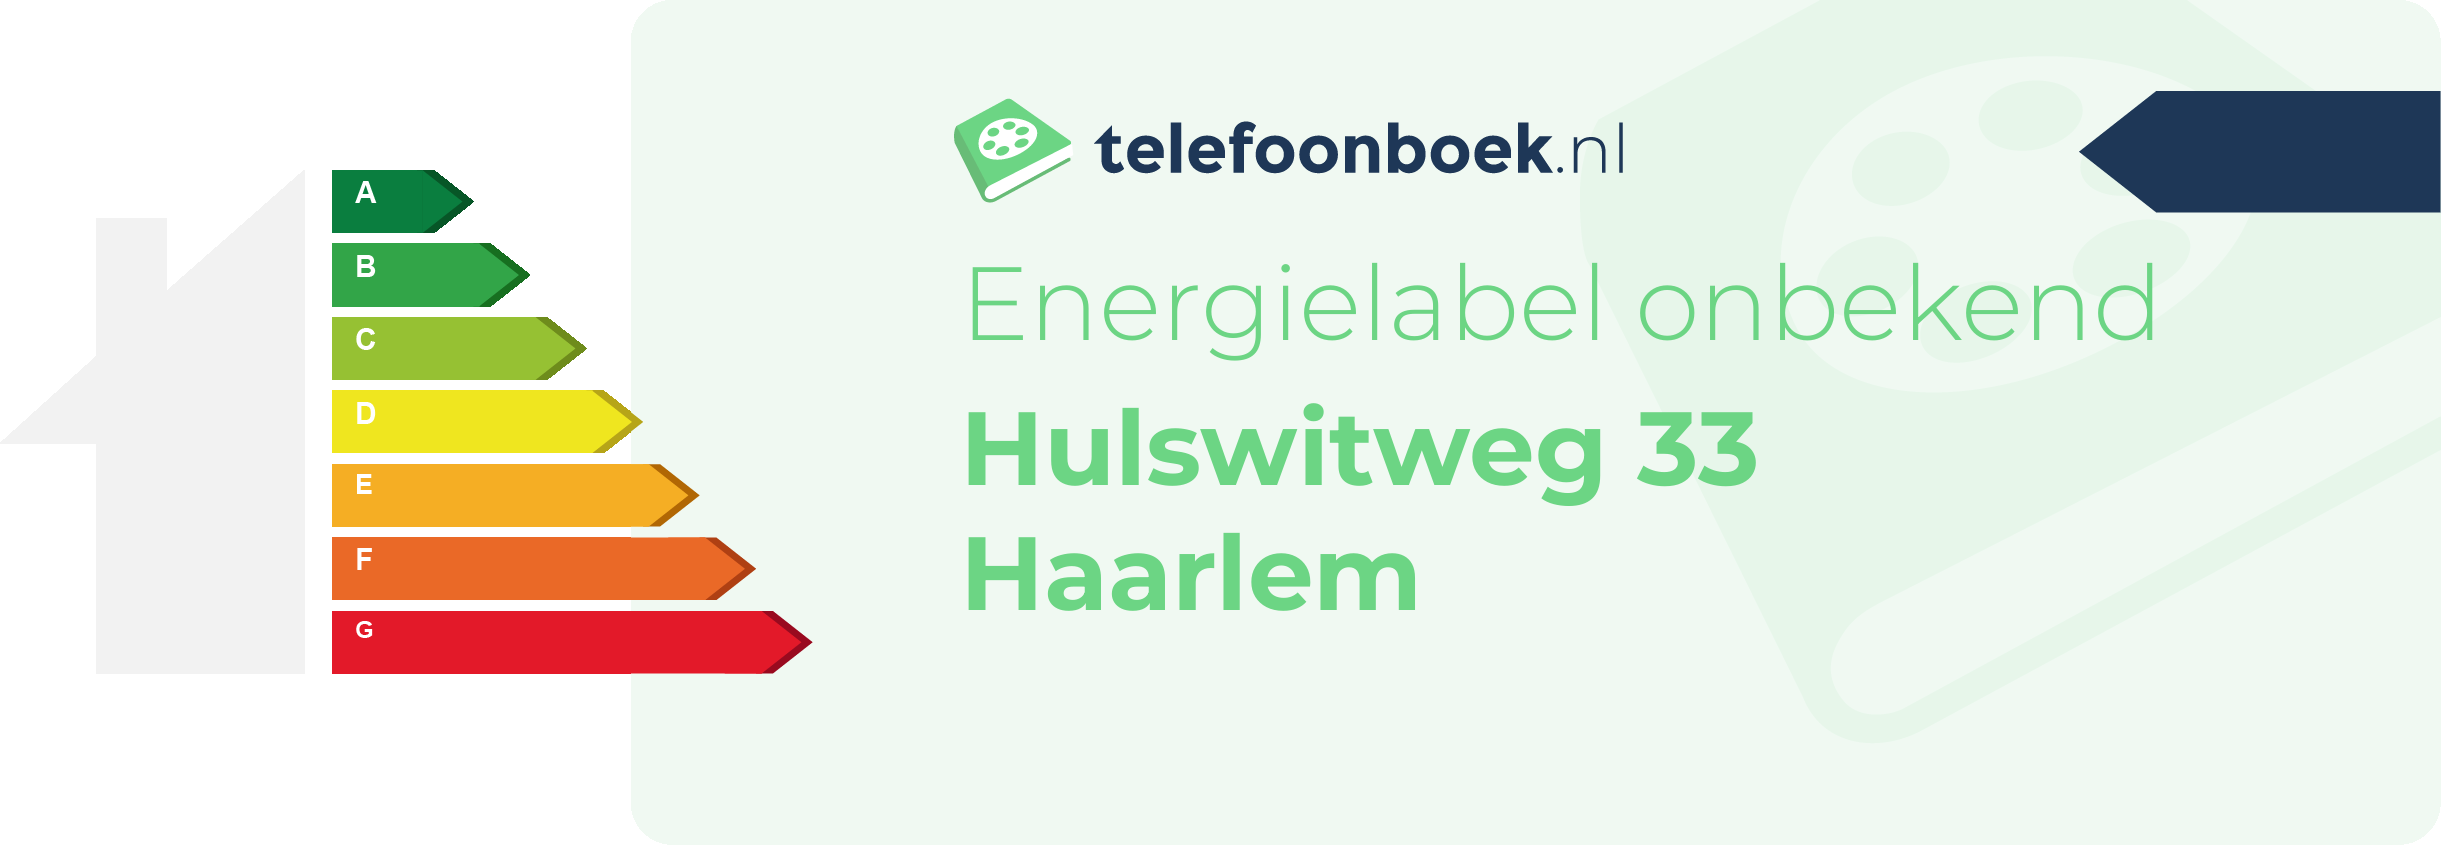 Energielabel Hulswitweg 33 Haarlem